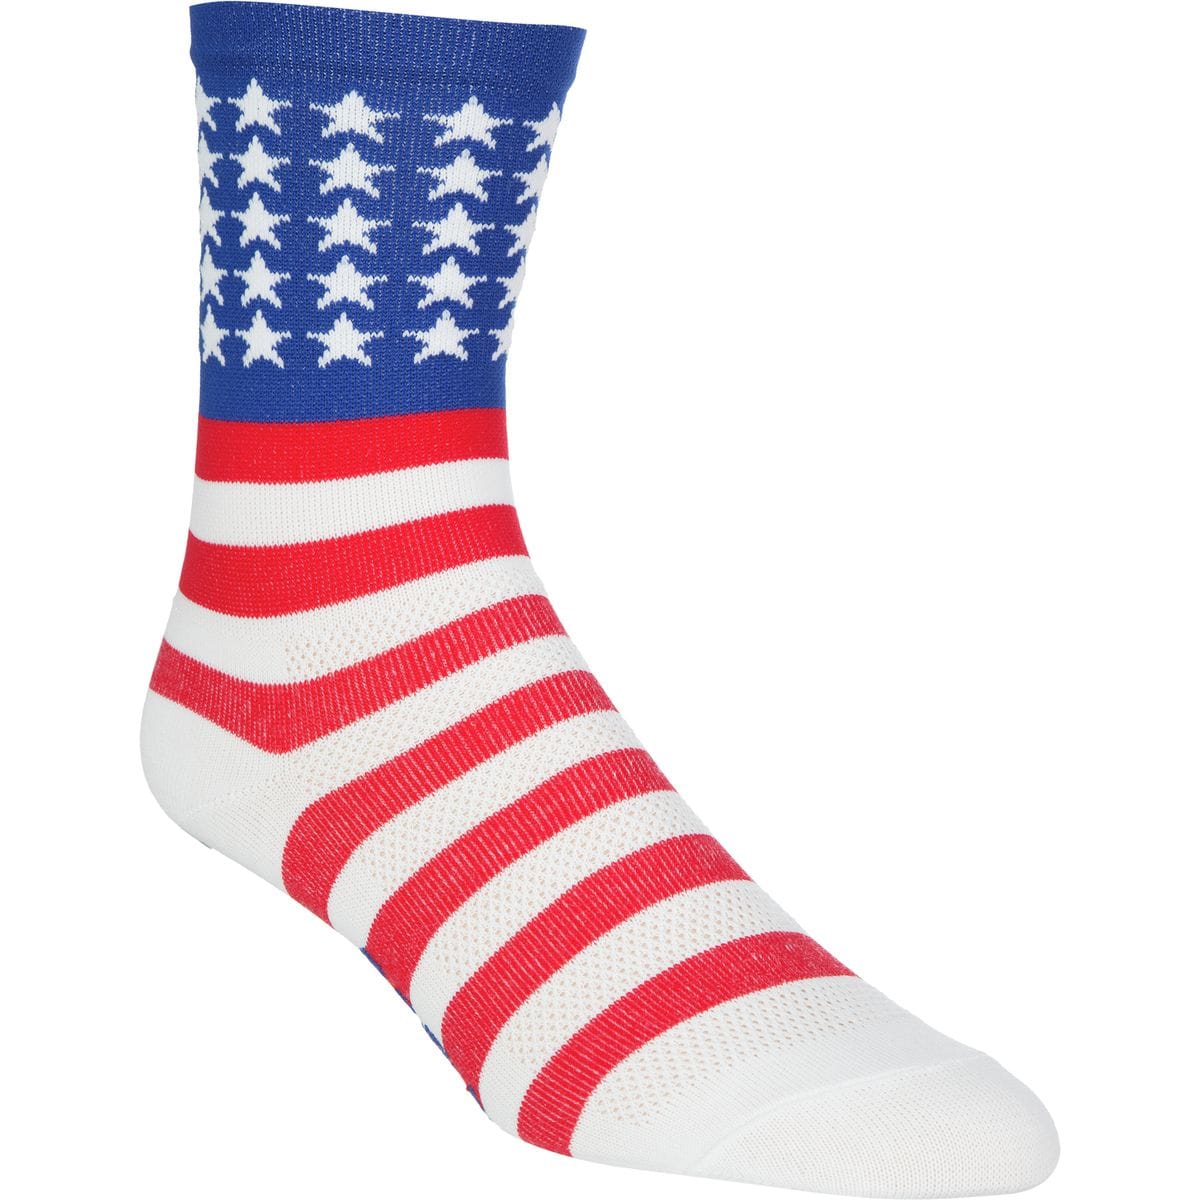 DeFeet Aireator USA Hi-Top 5in Sock - Men's